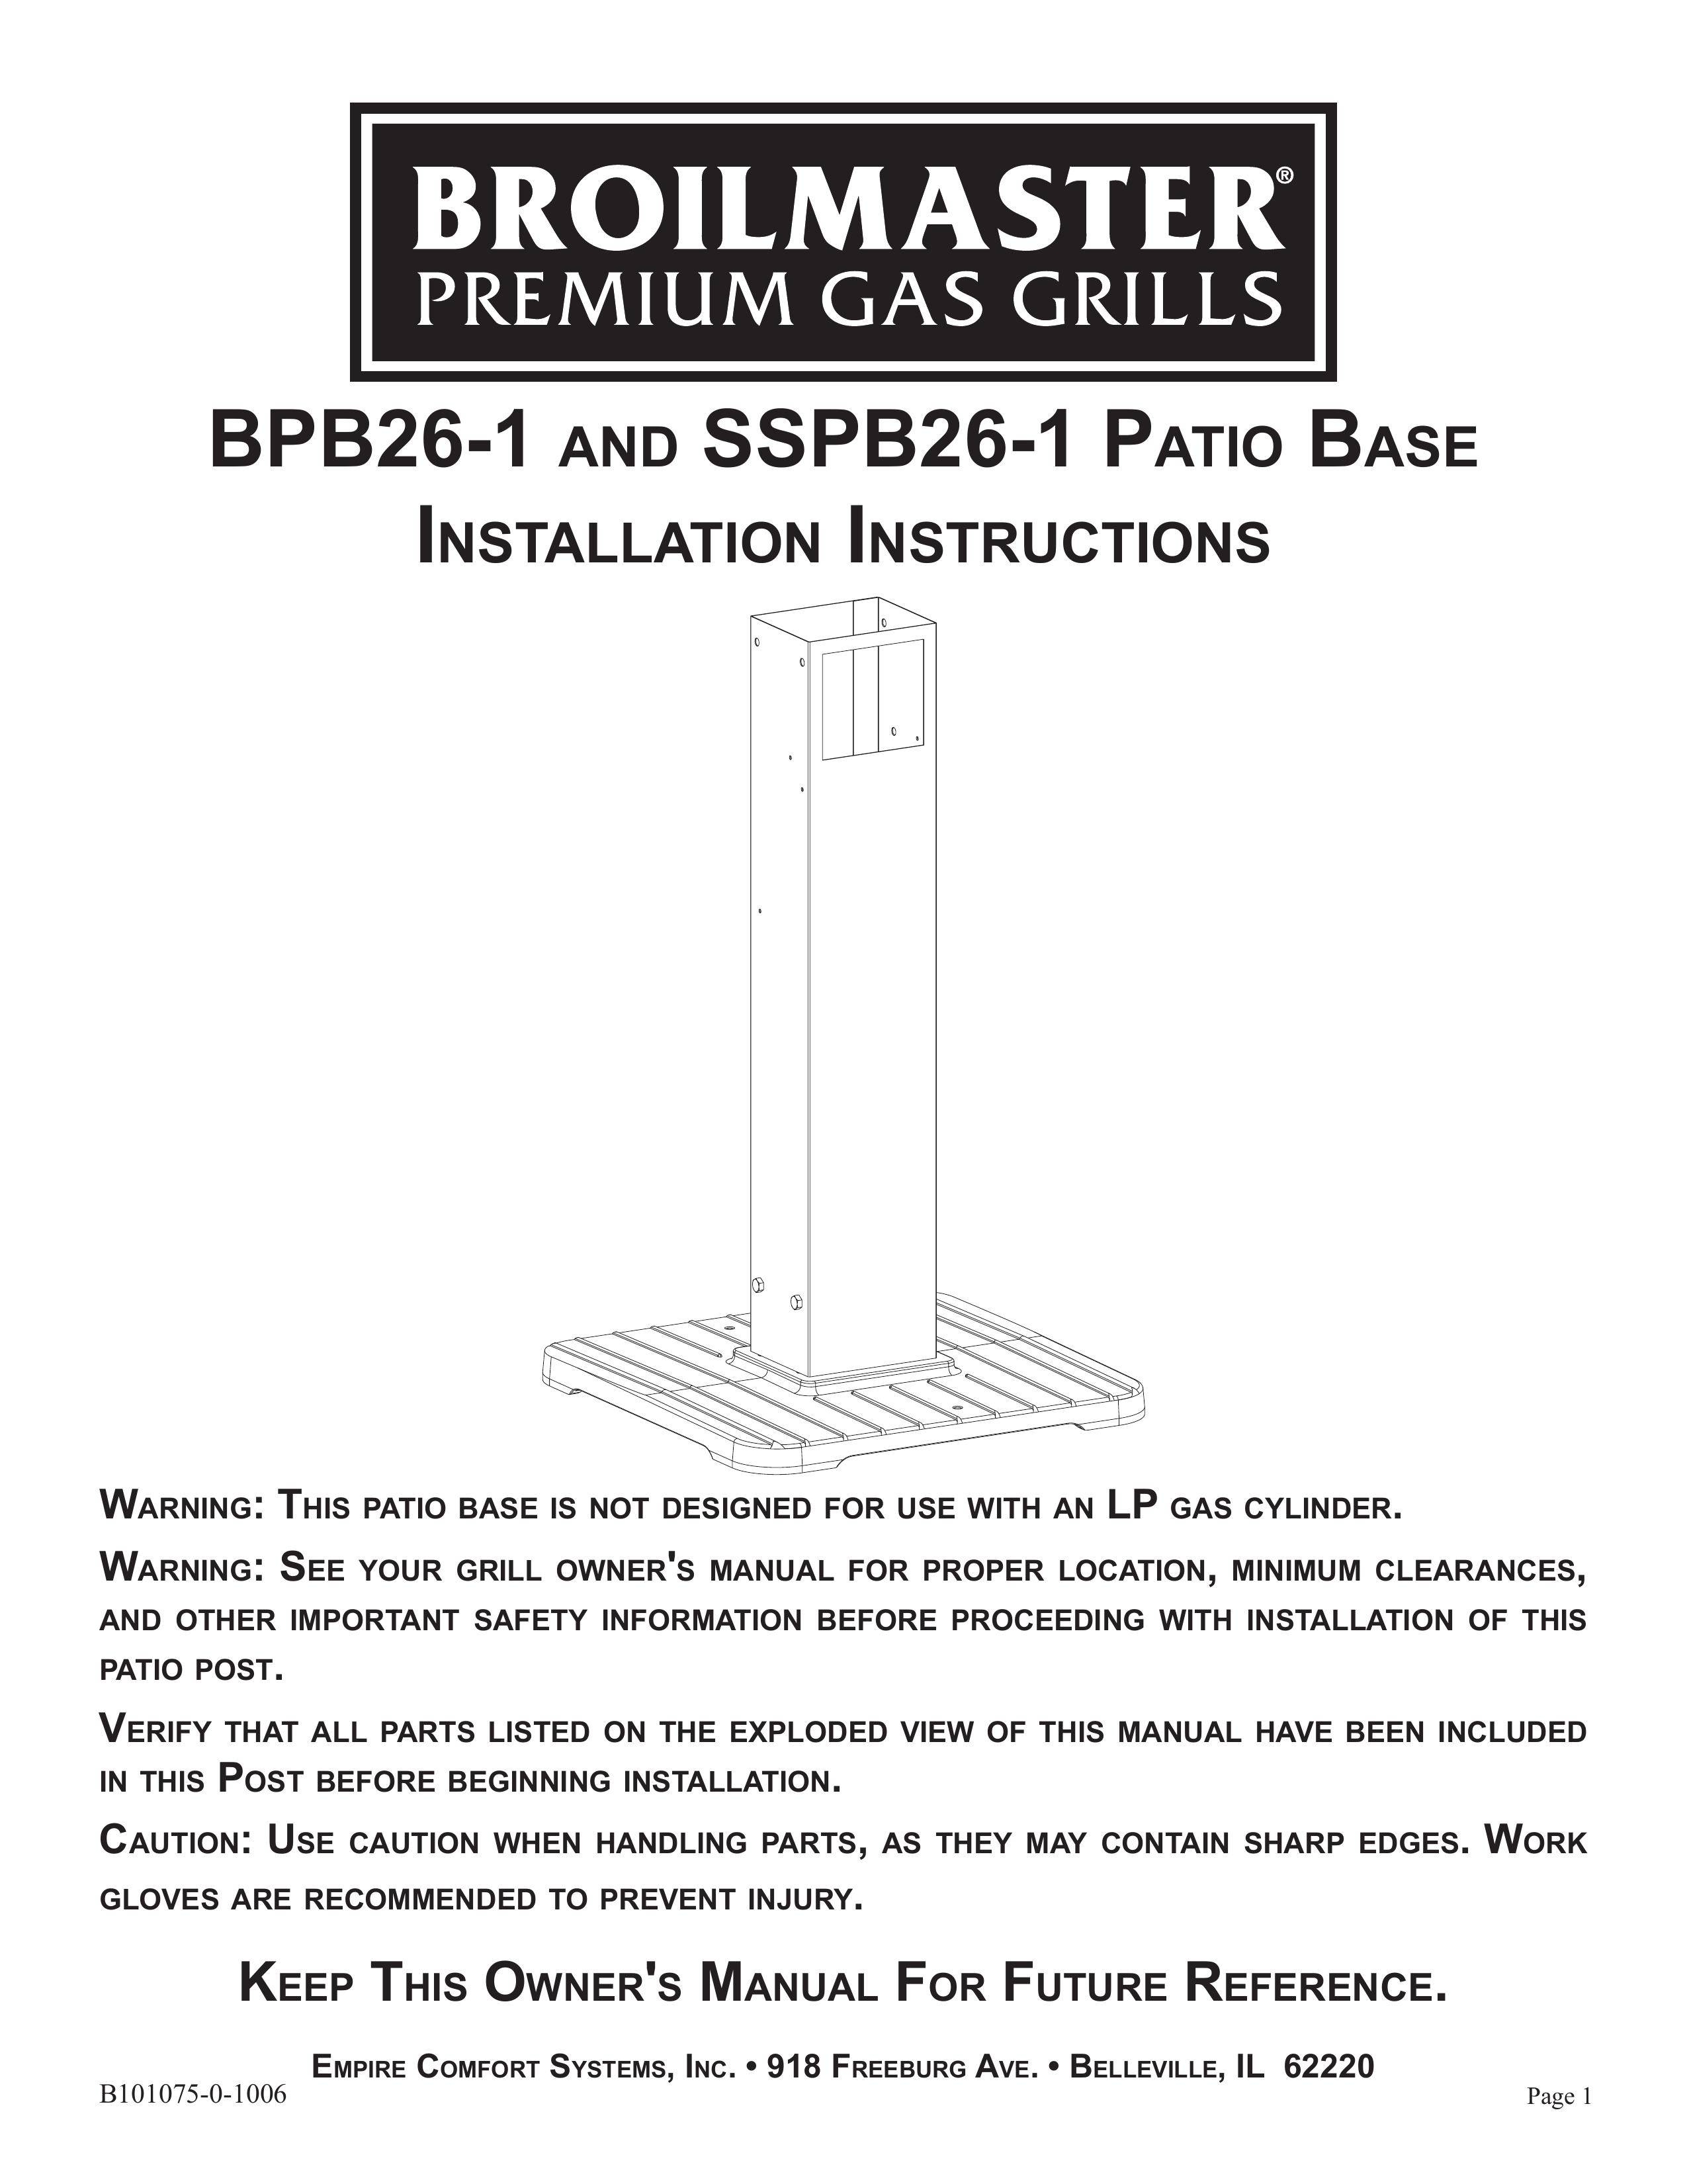 Broilmaster BPB26-1 Gas Grill User Manual